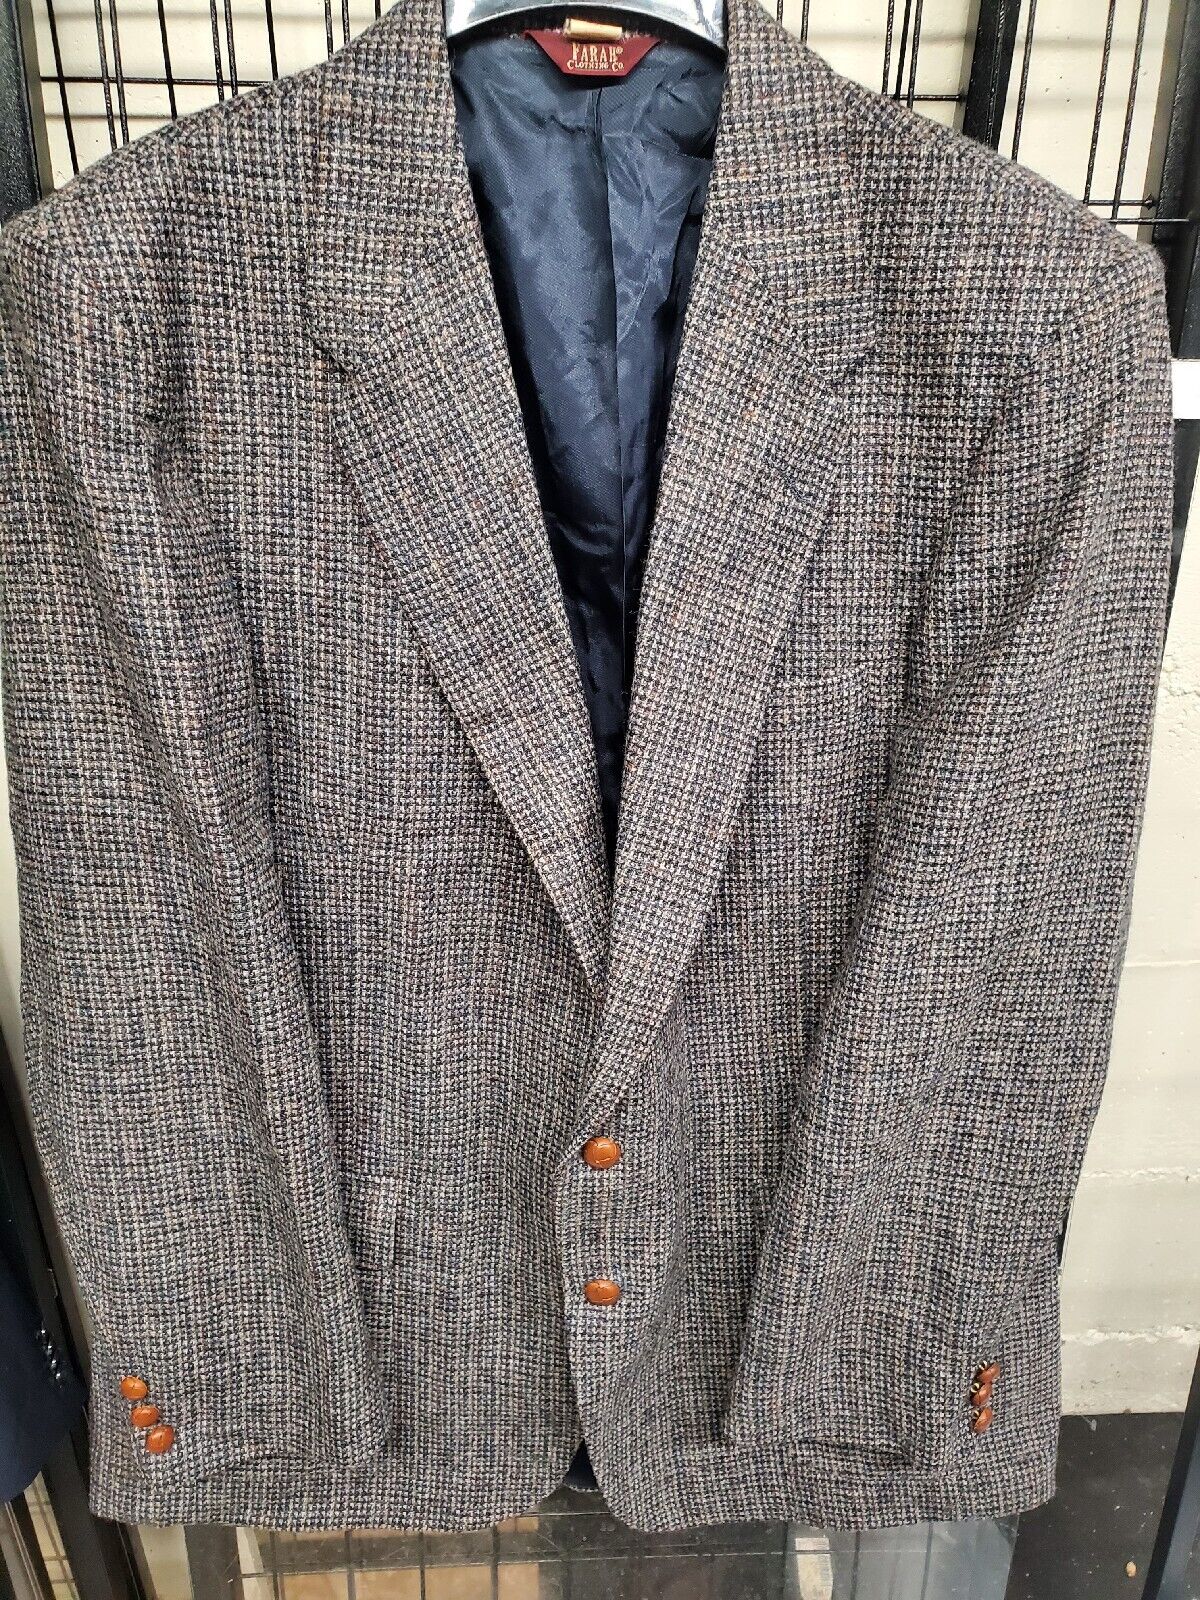 Vintage Farah Sport Coat Blazer Donegal Tweed Jacket Mens 46L MINT